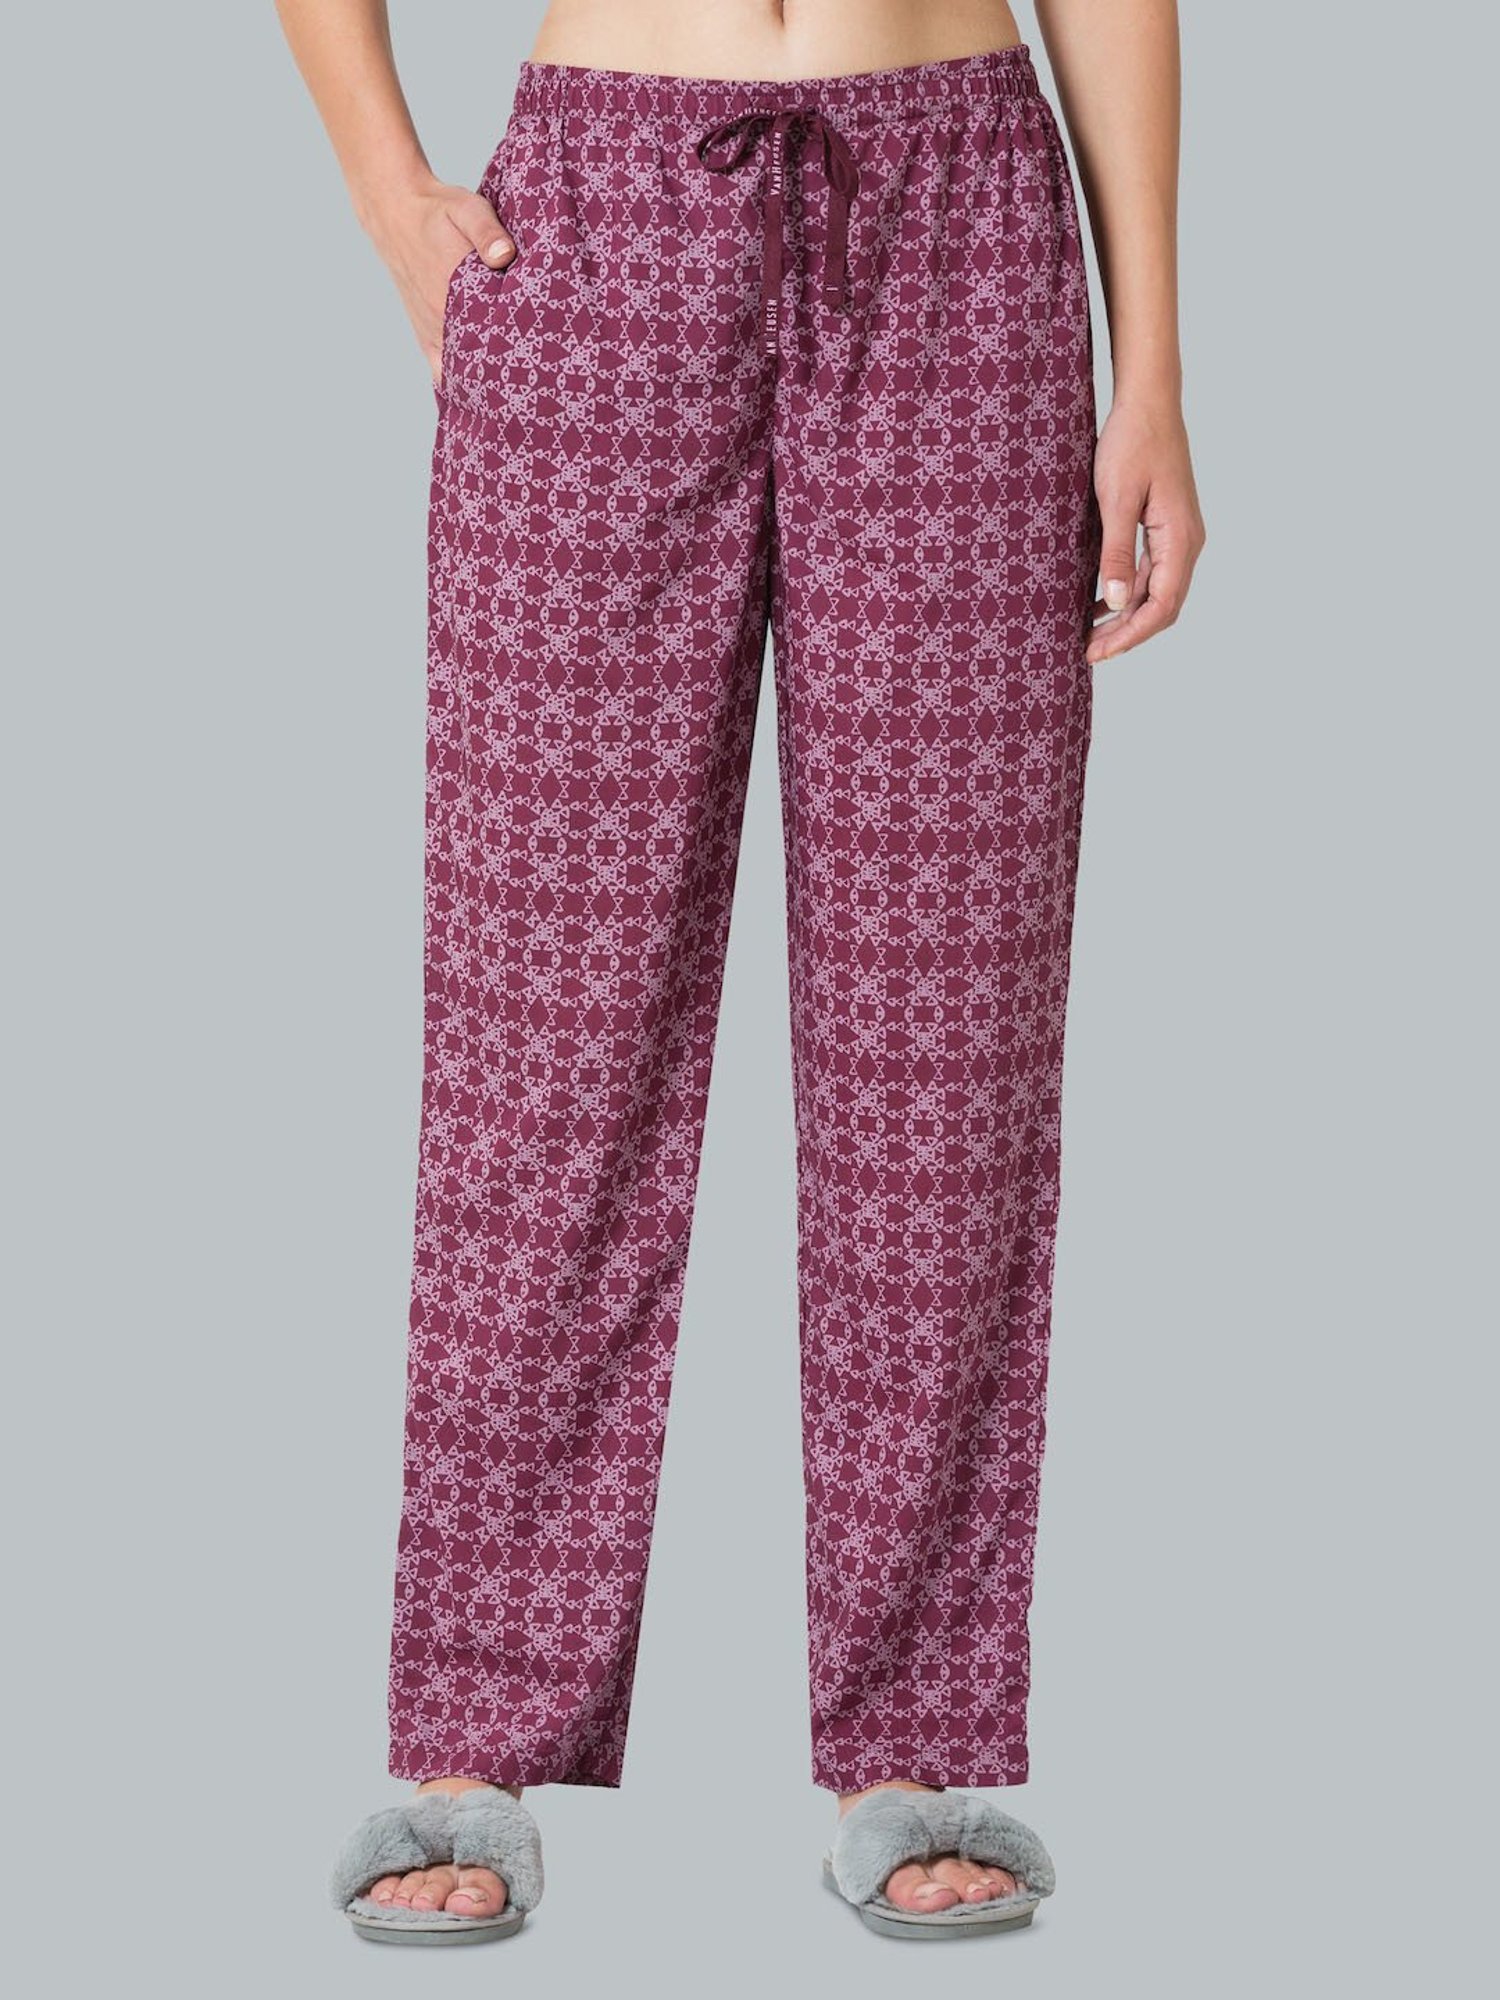 lady willington Women Pyjama  Buy lady willington Women Pyjama Online at  Best Prices in India  Flipkartcom